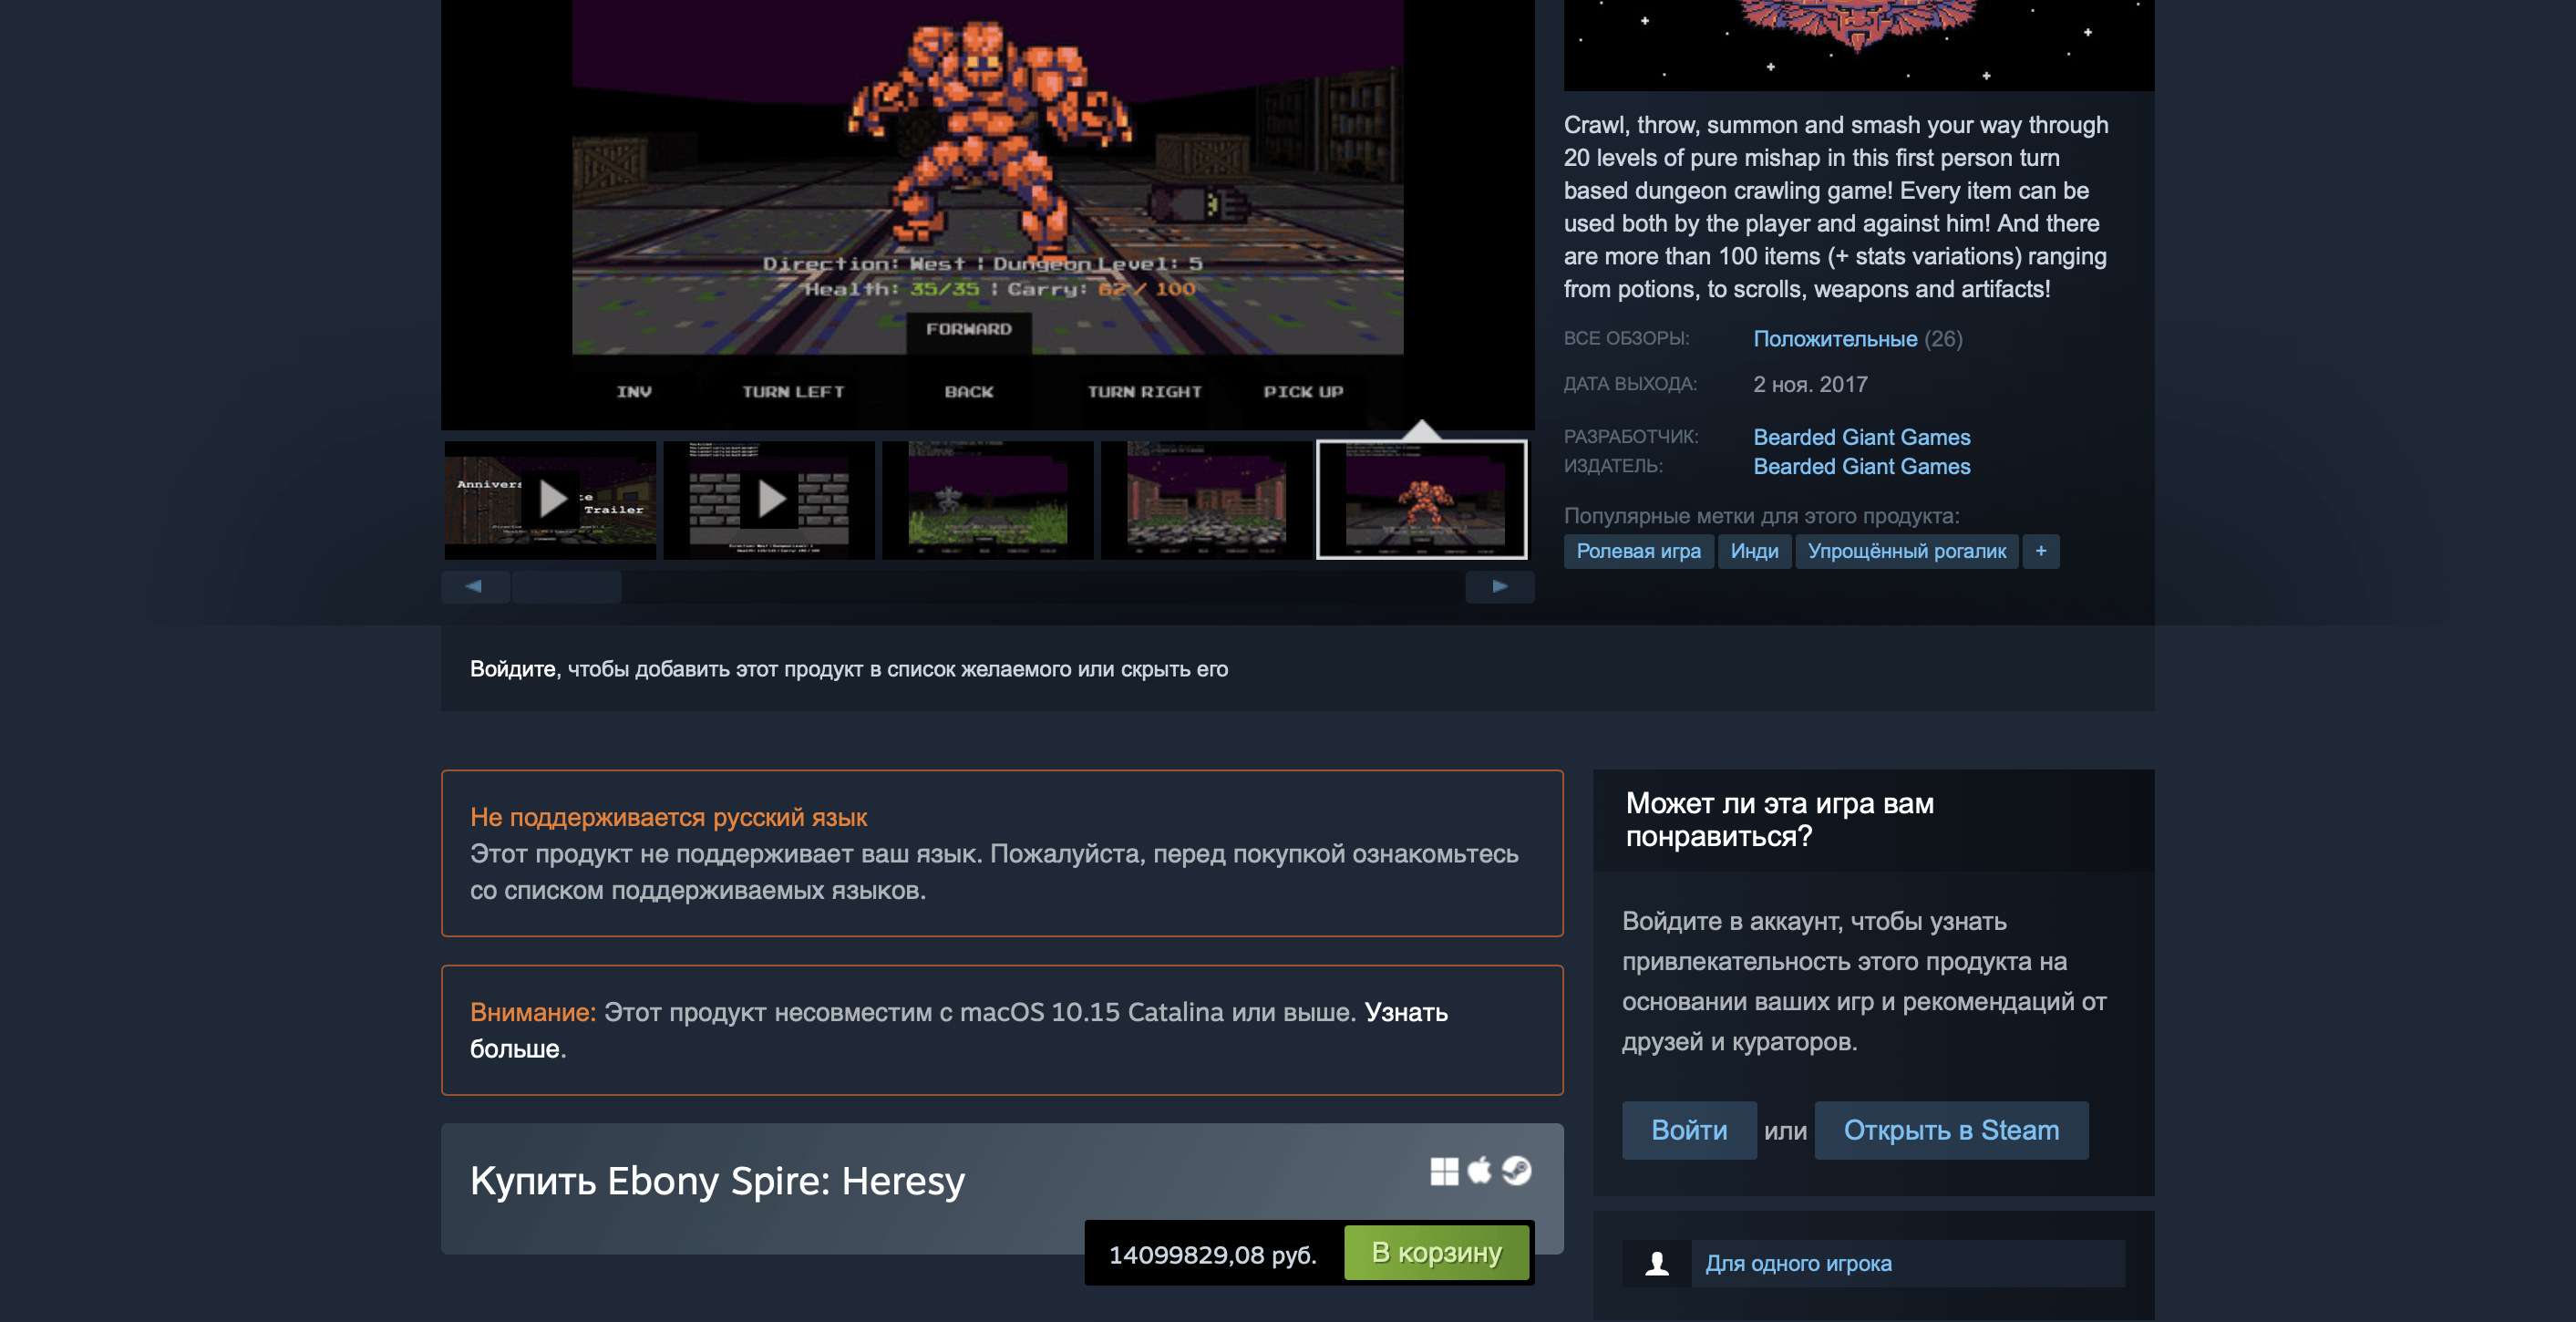 Цена Ebony Spire: Heresy в Steam выросла до 14 миллионов рублей